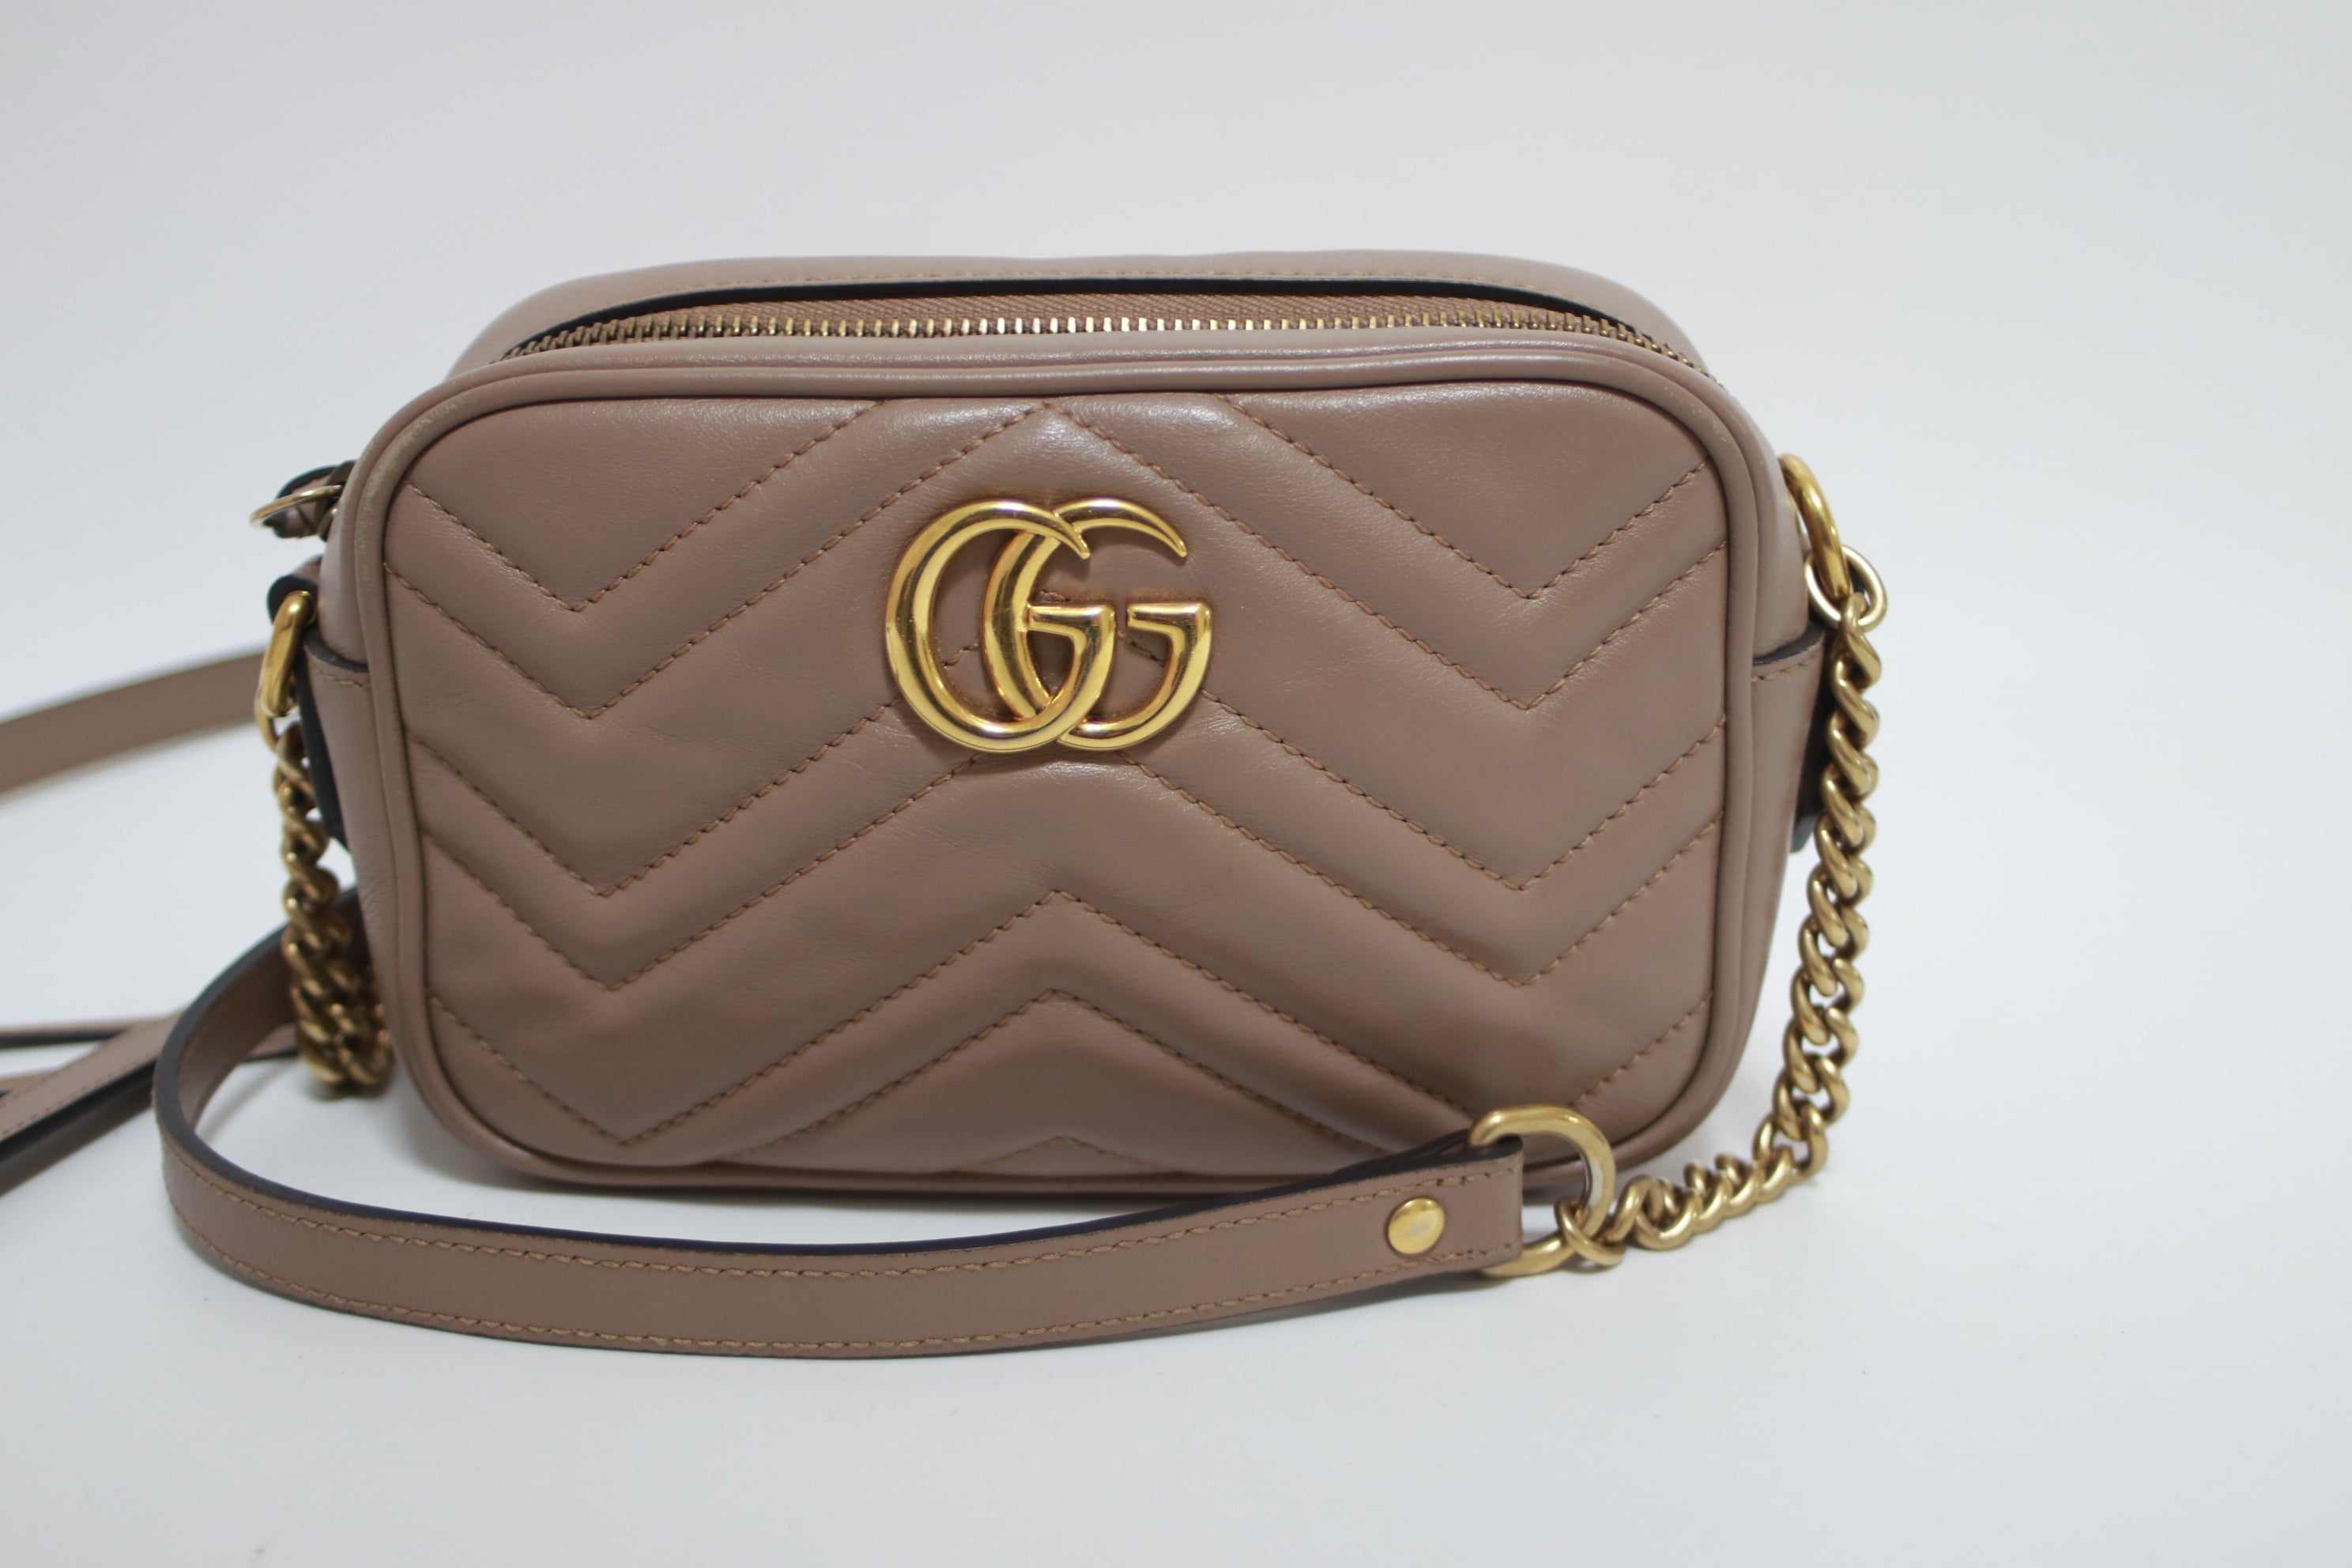 Gucci Marmont Small Shoulder Bag Porcelain Rose Used (7942)